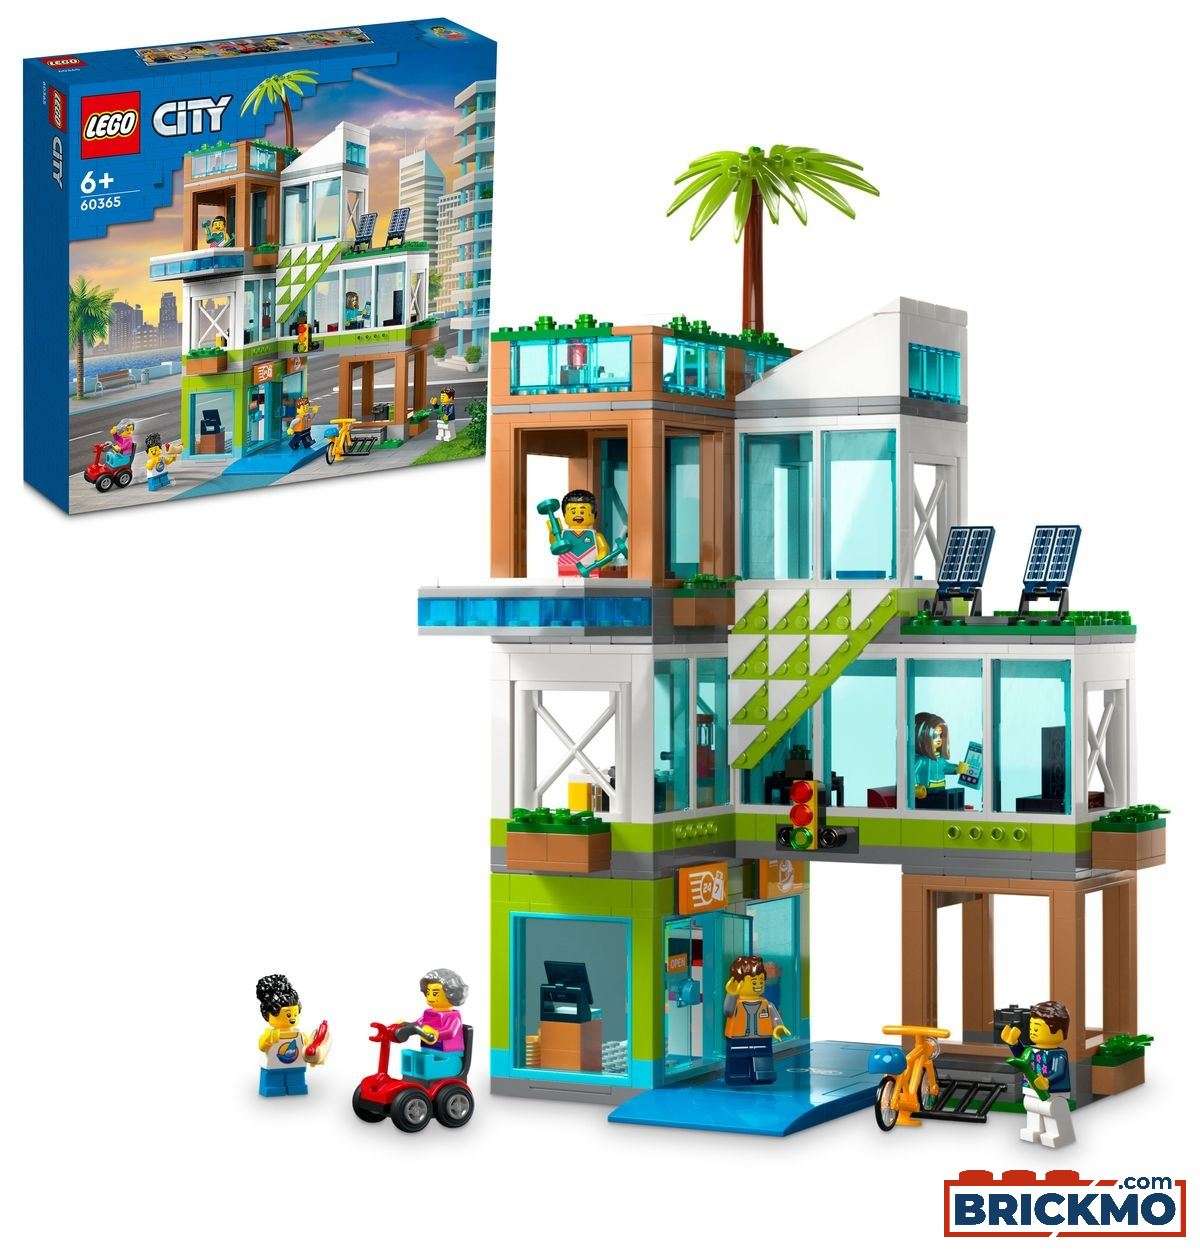 LEGO City 60365 Apartmenthaus 60365